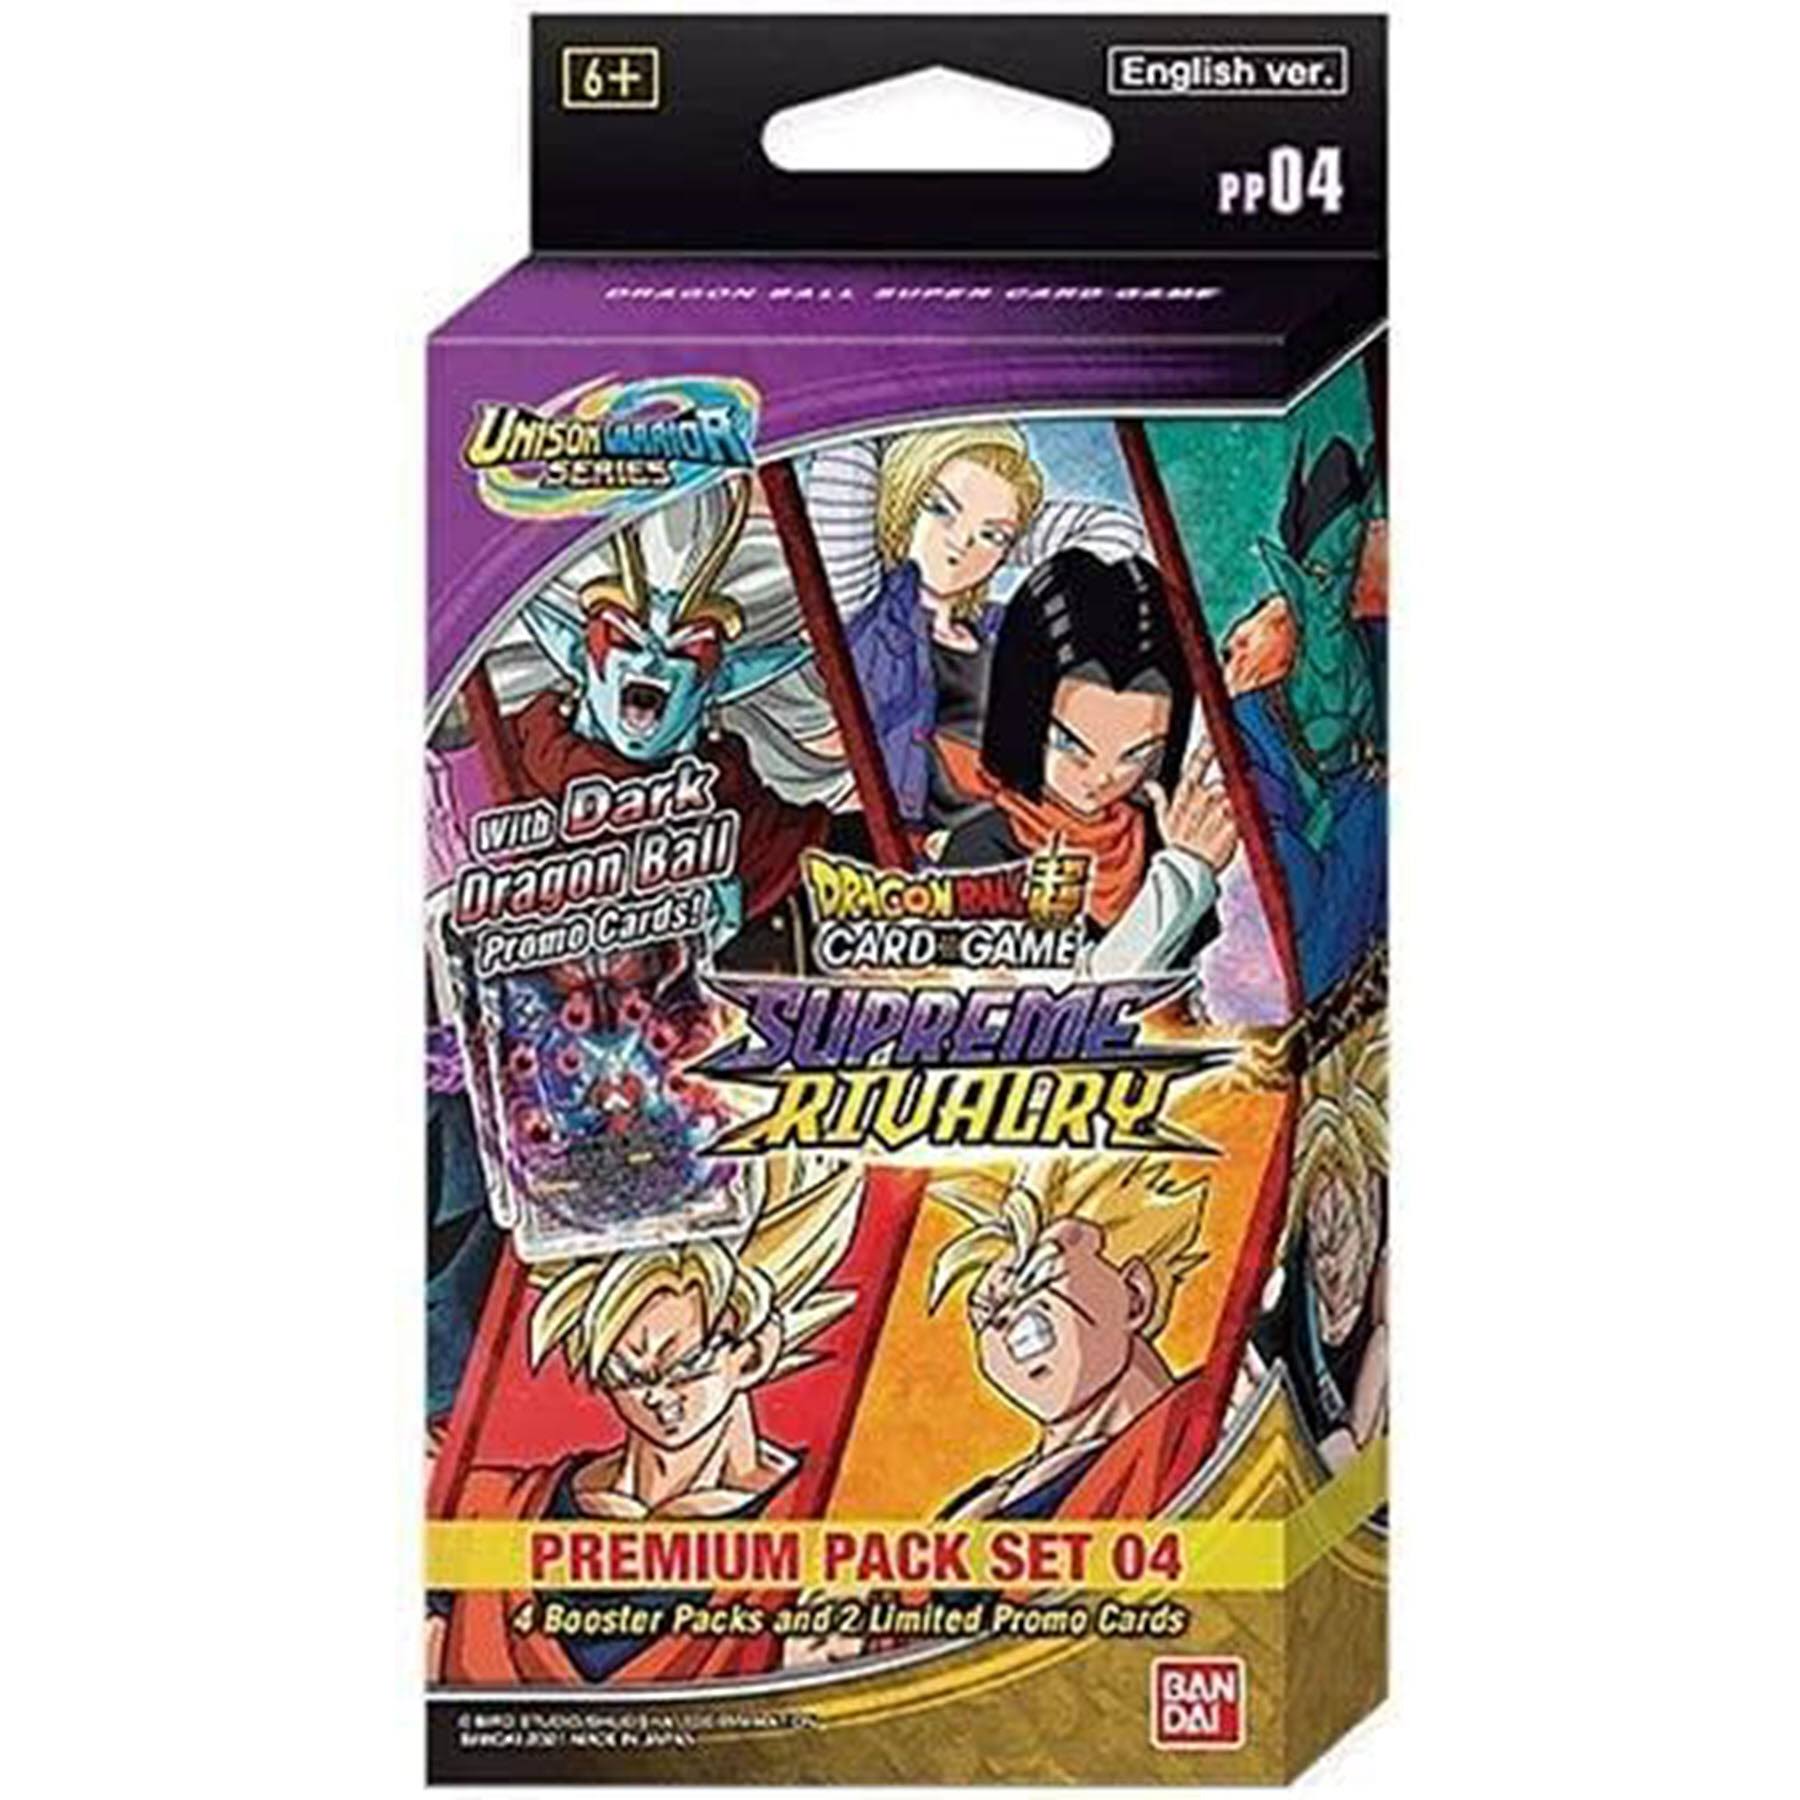 Dragon Ball Super TCG: Unison Warrior - Supreme Rivalry Premium Pack Set 04